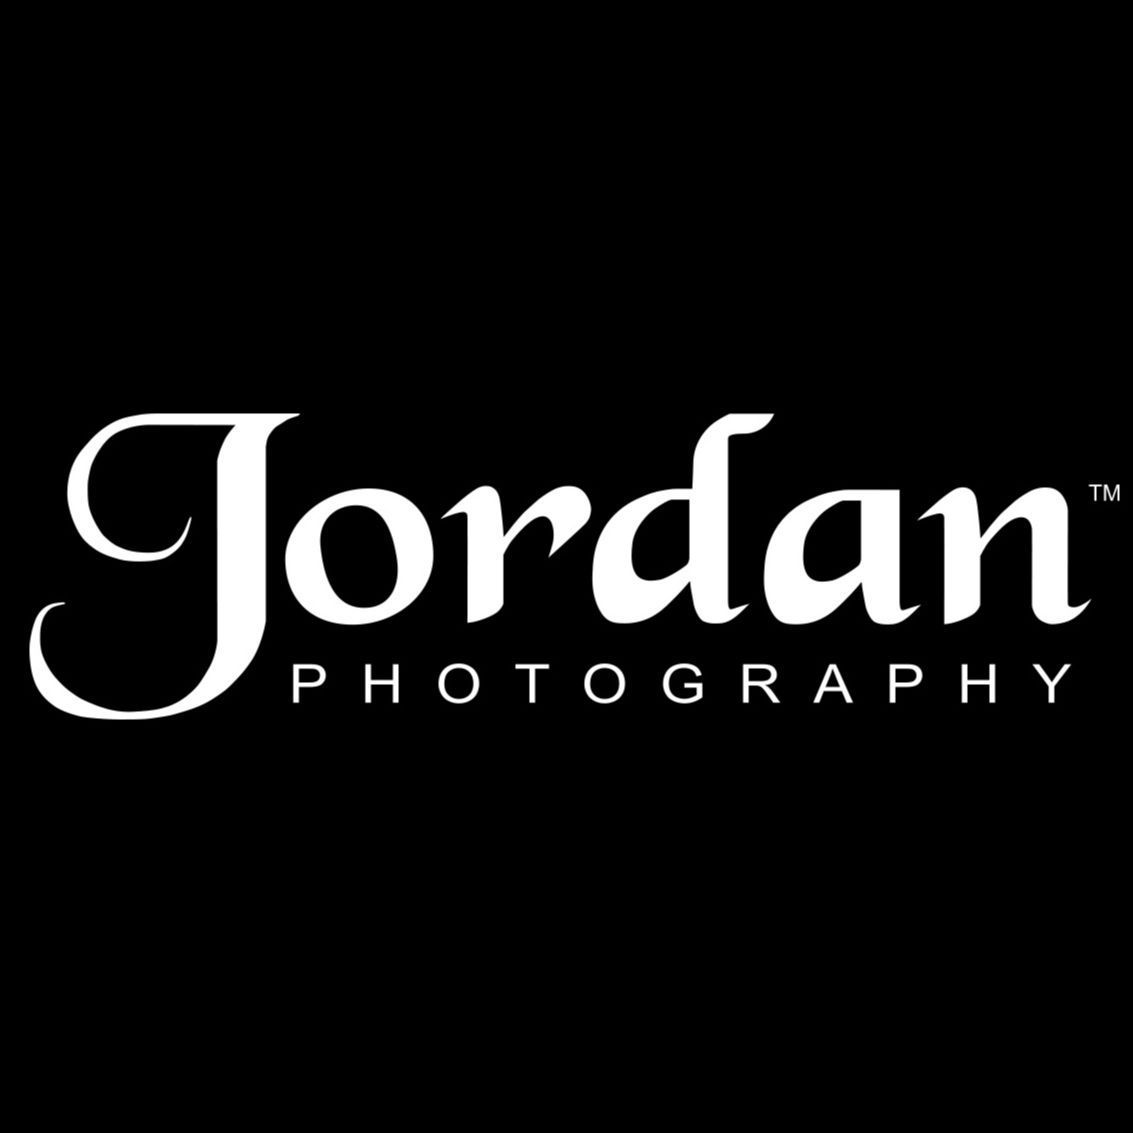 Jordan Photography, 7702 W 144th Ter, Overland Park, 66223